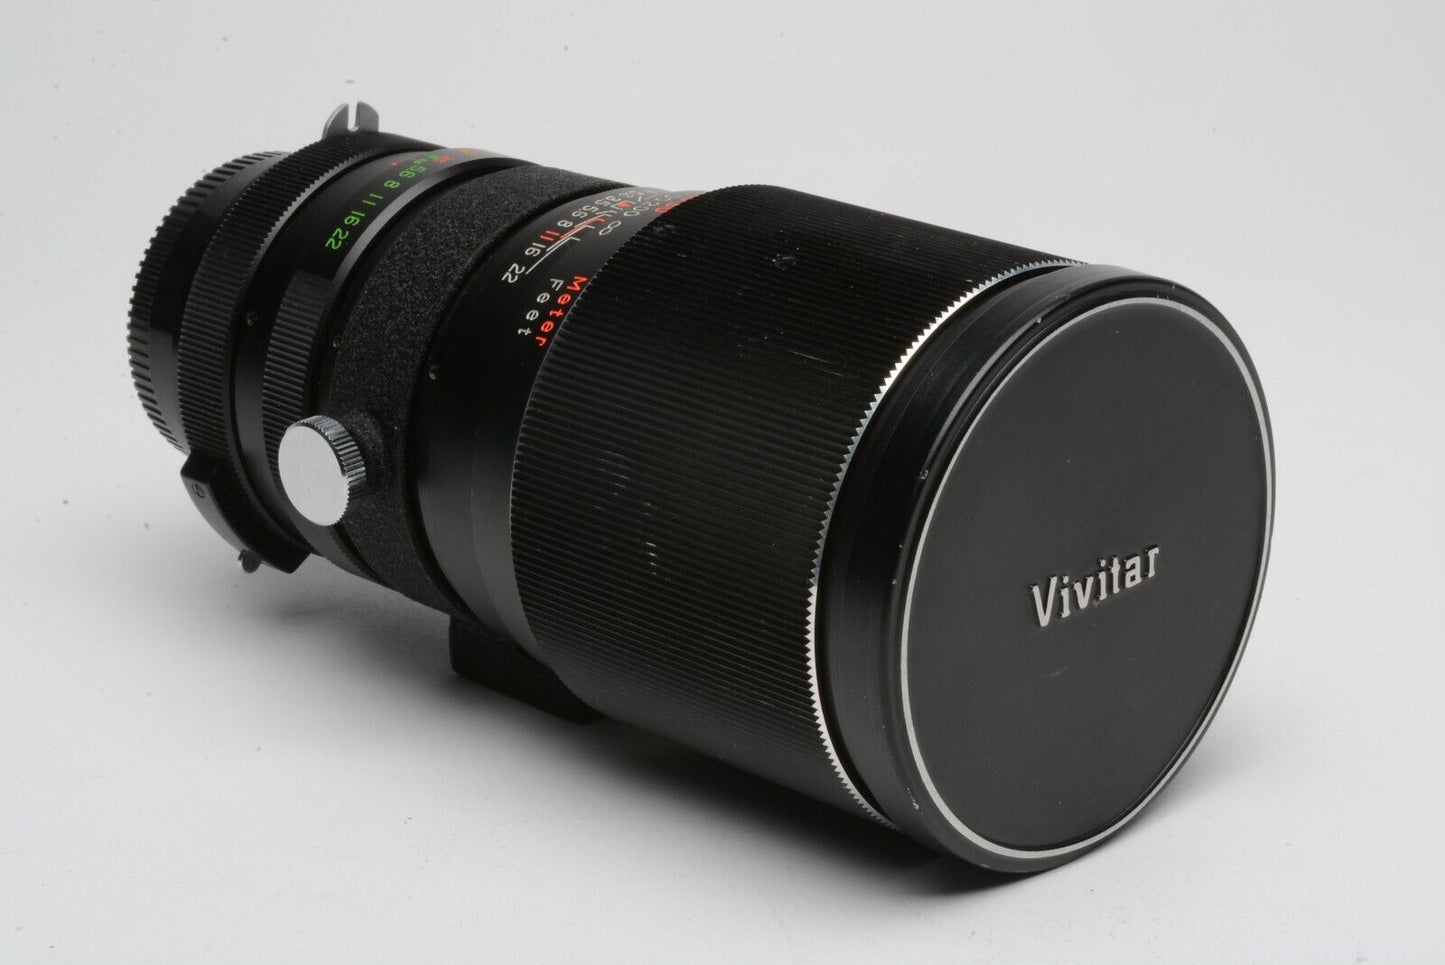 EXC++ VIVITAR 200MM F3.5 TELEPHOTO LENS FOR NIKON F NON-AI MOUNT, COLLAR+CAPS